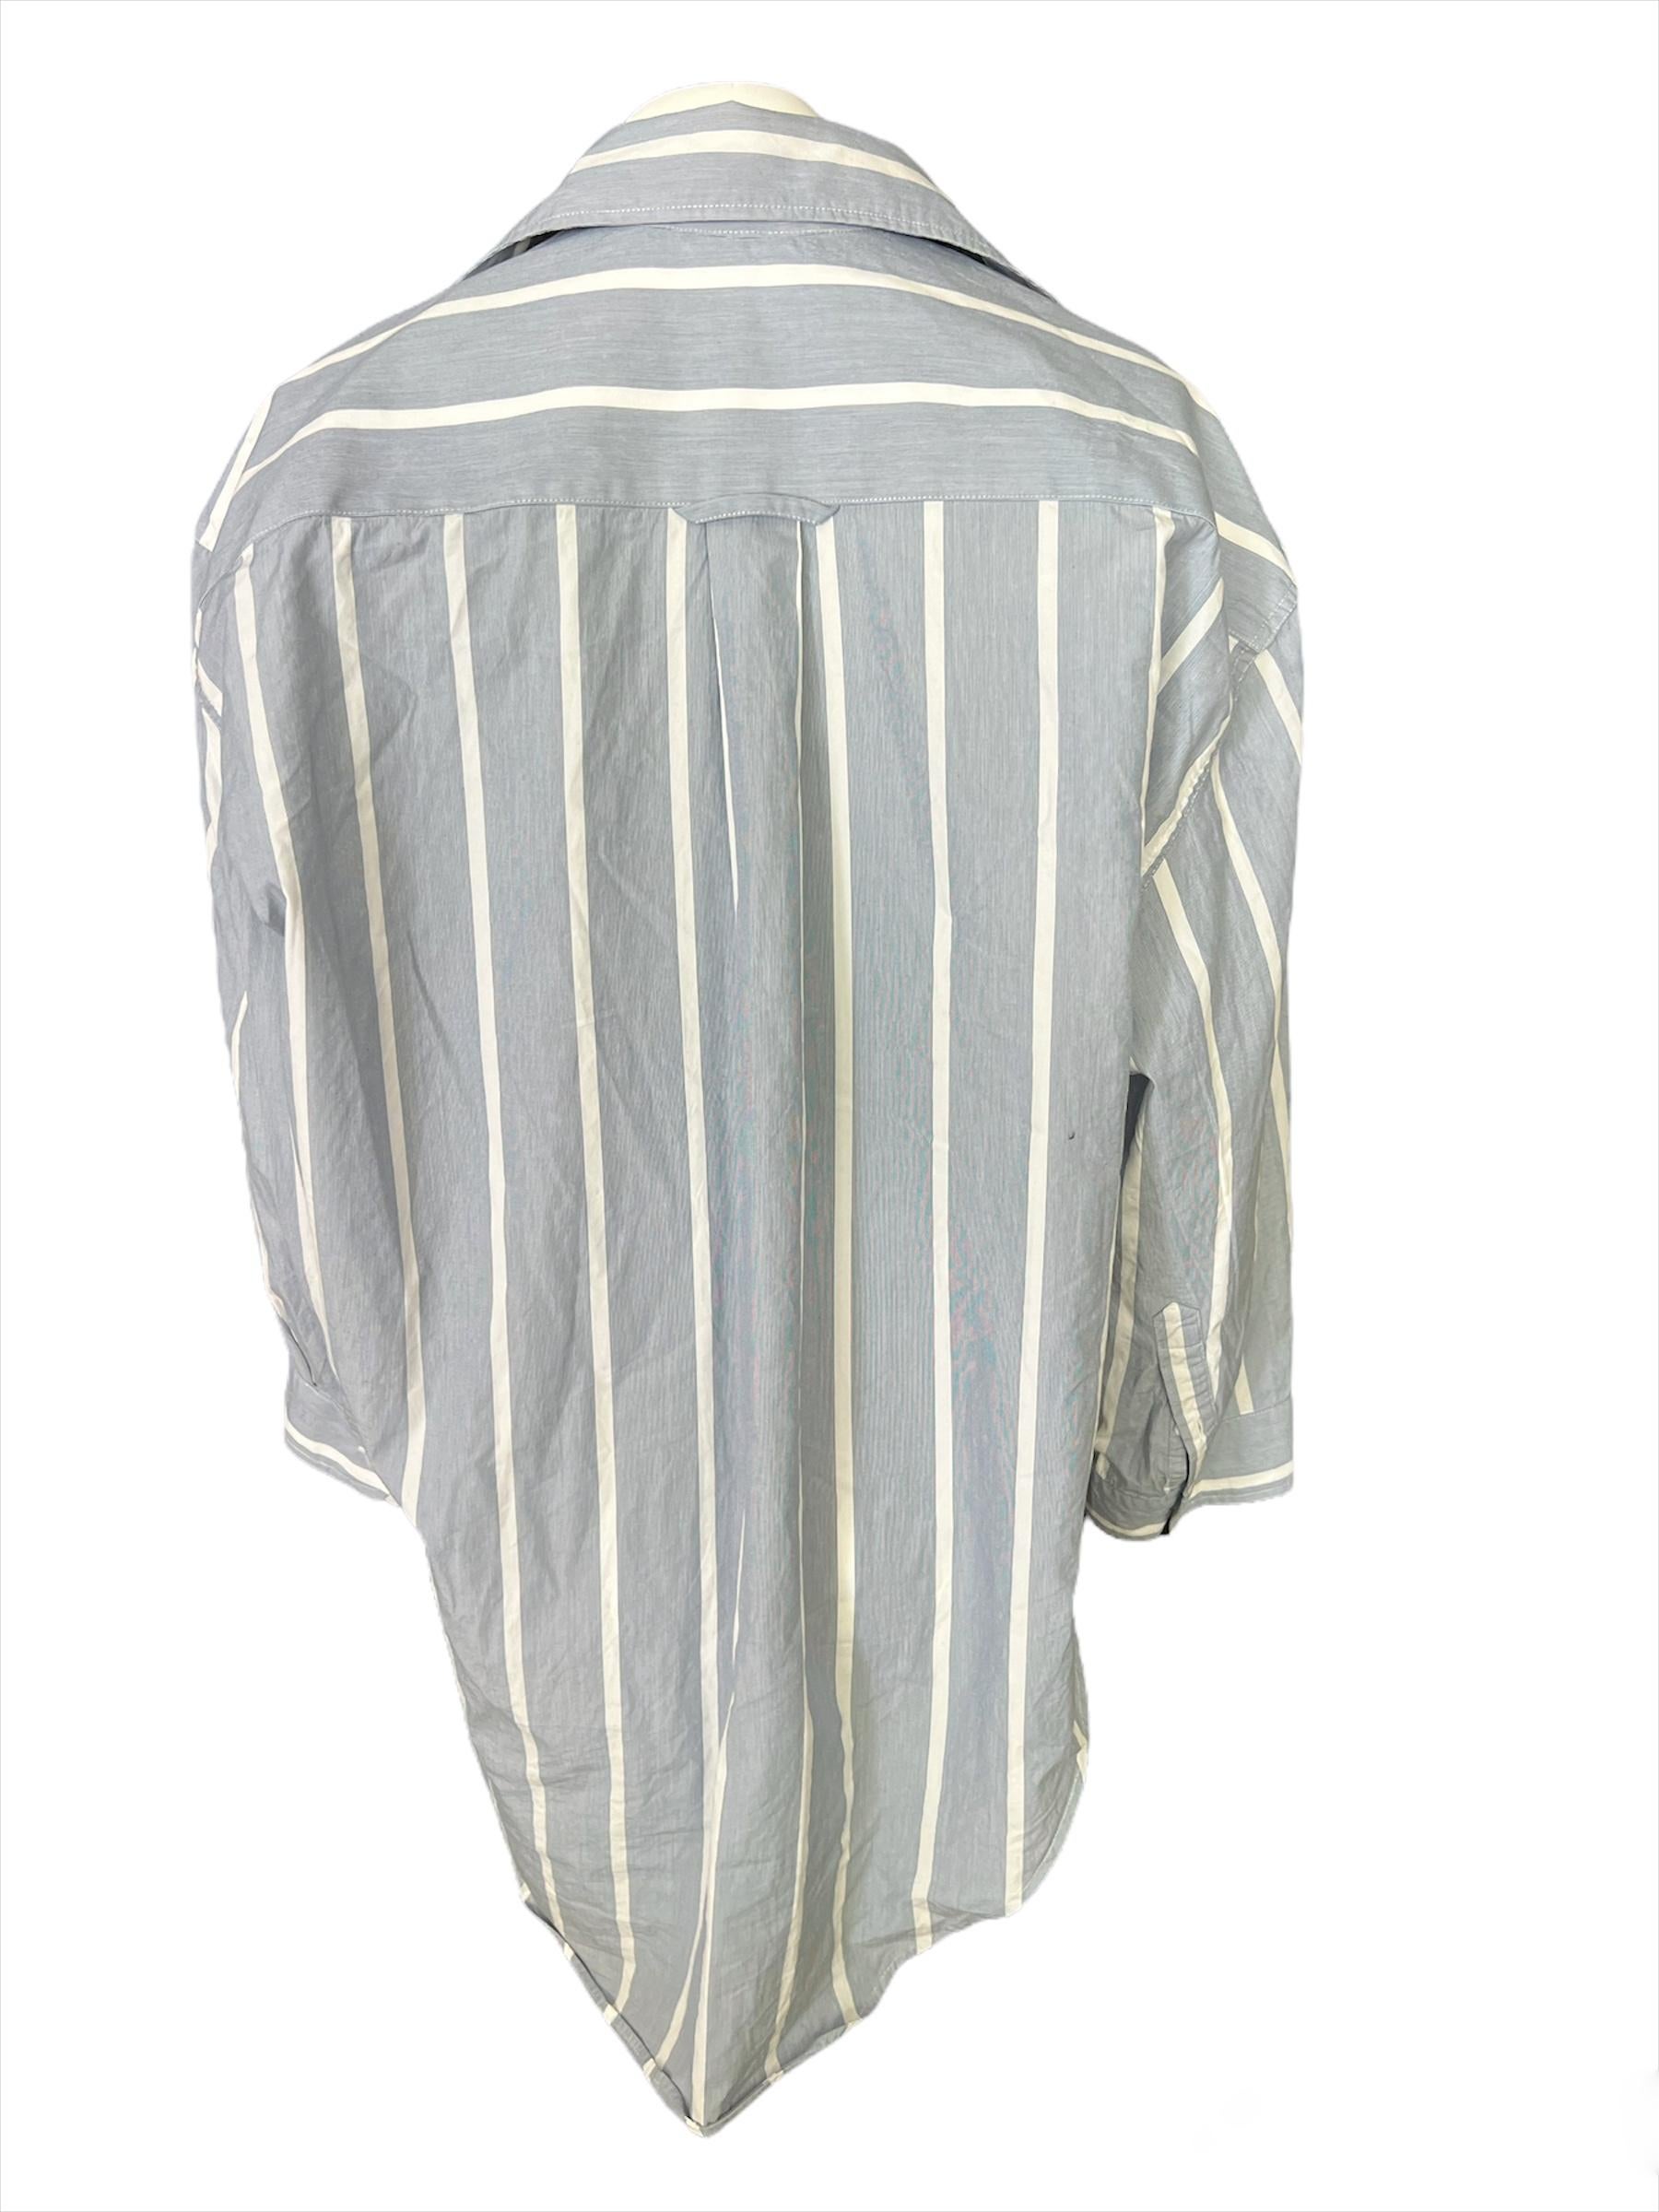 - Striped pattern
- Long sleeves 
- Asymmetrical style
- Oversized fit
- Side pocket detail 